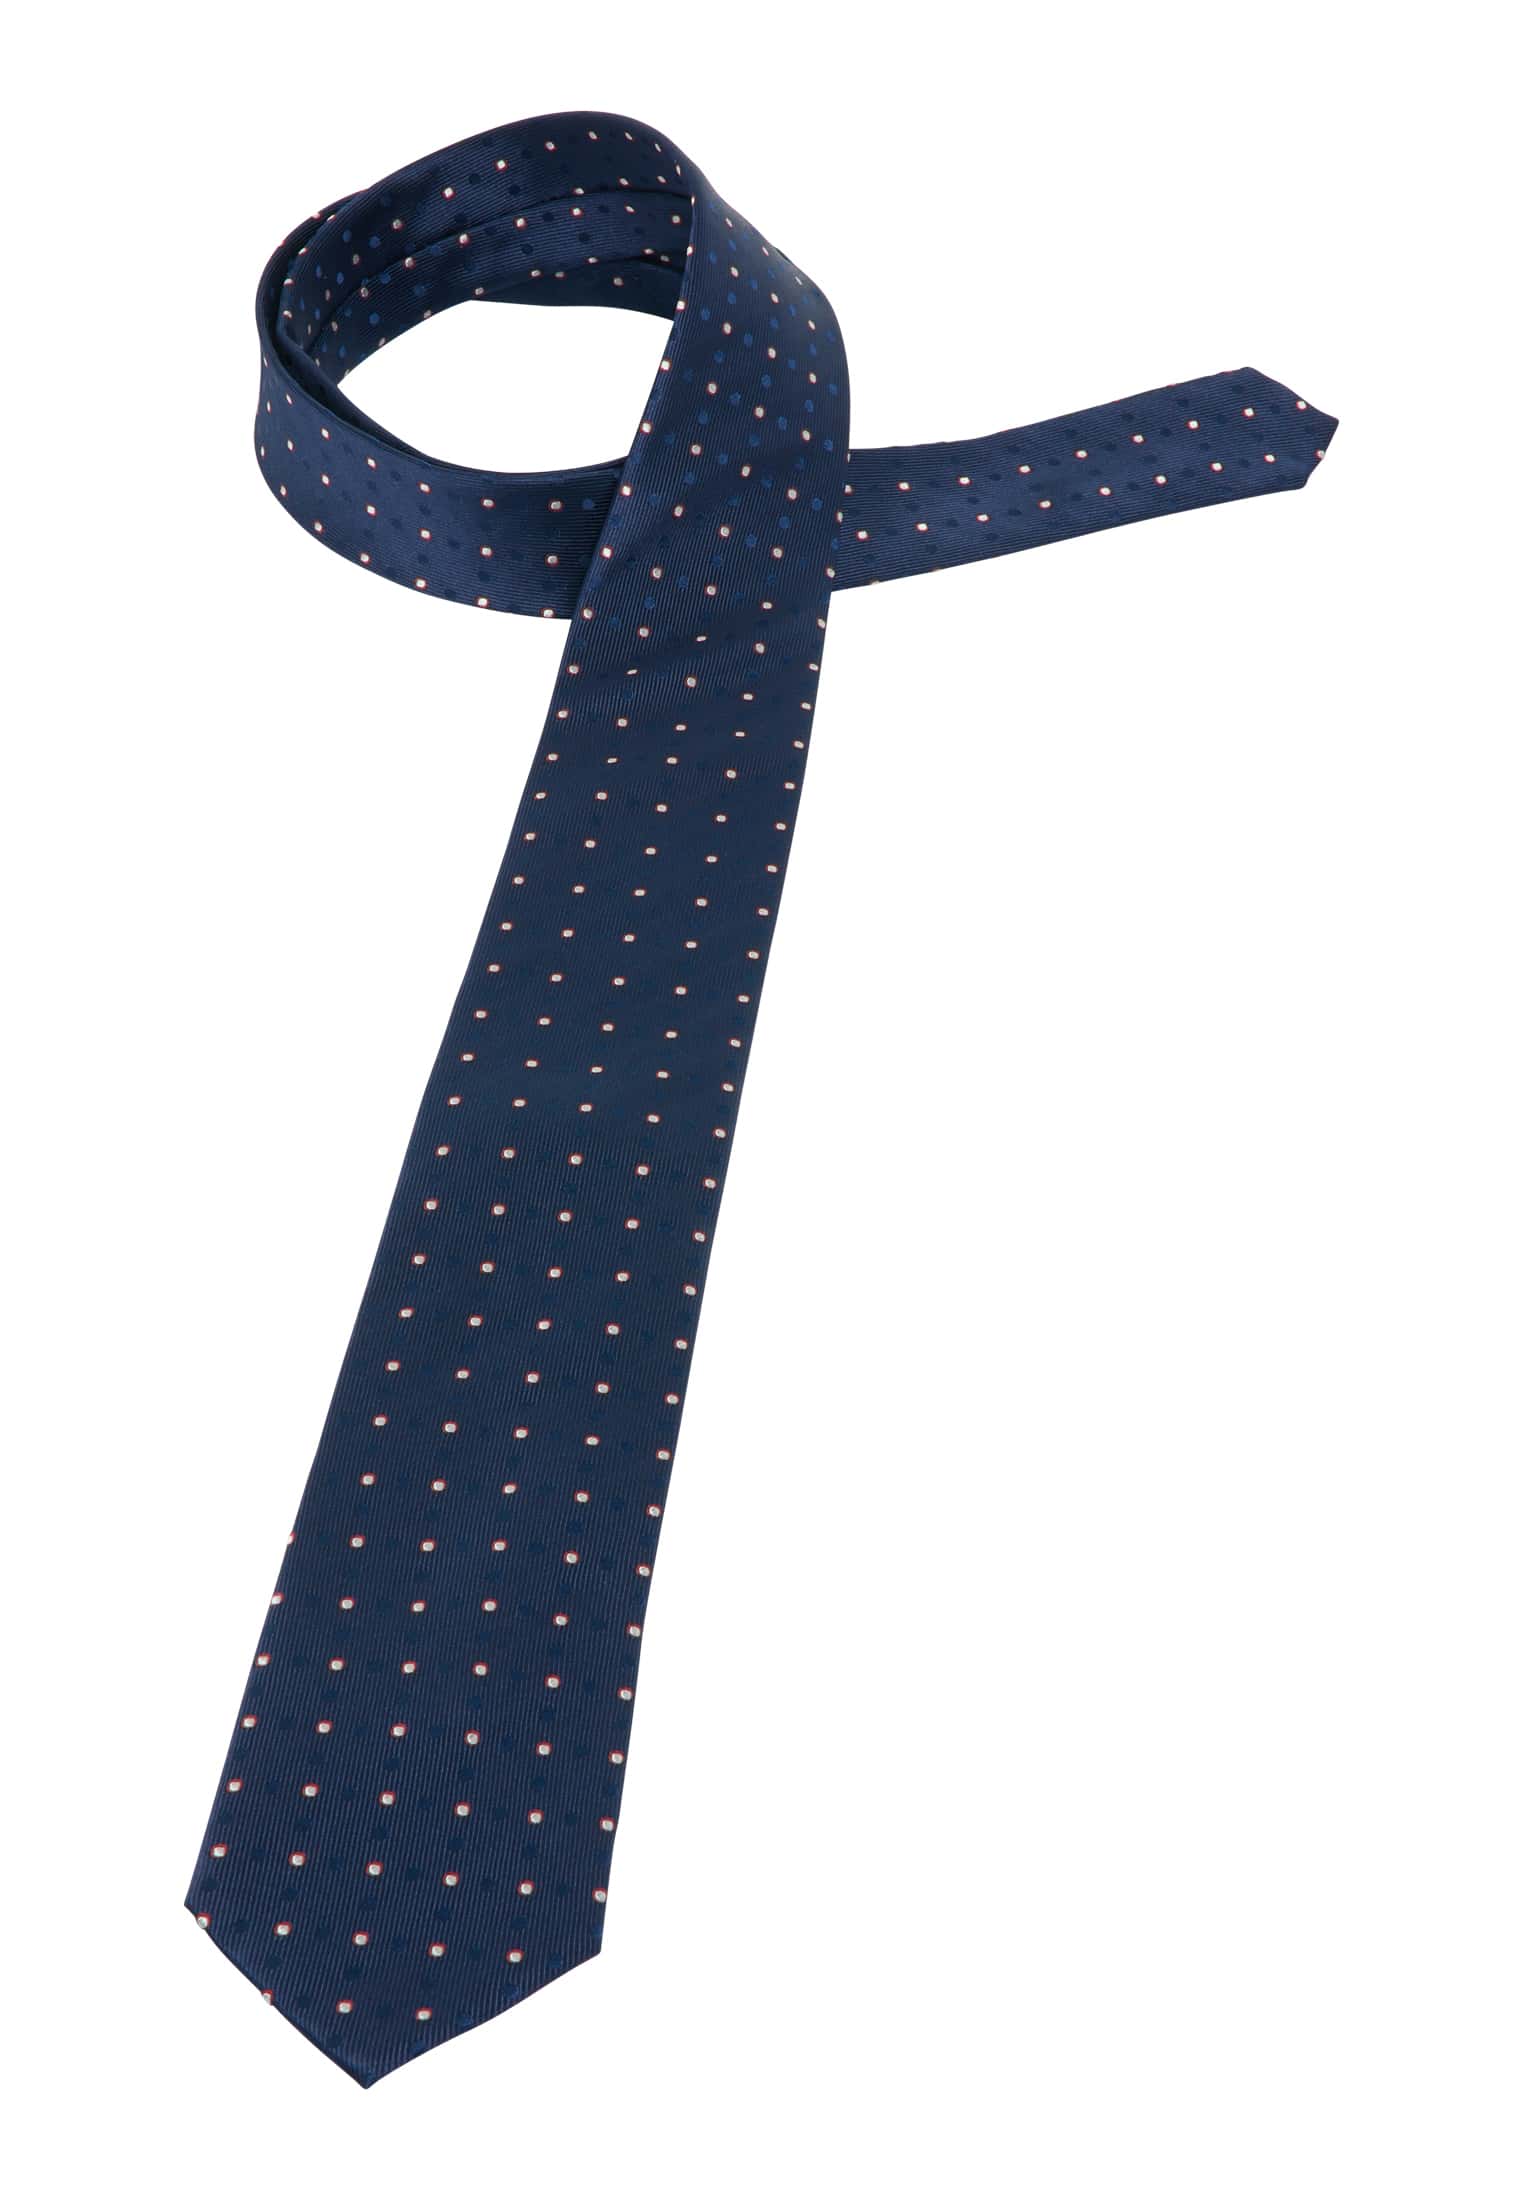 Krawatte in getupft navy | navy 142 | 1AC01907-01-91-142 